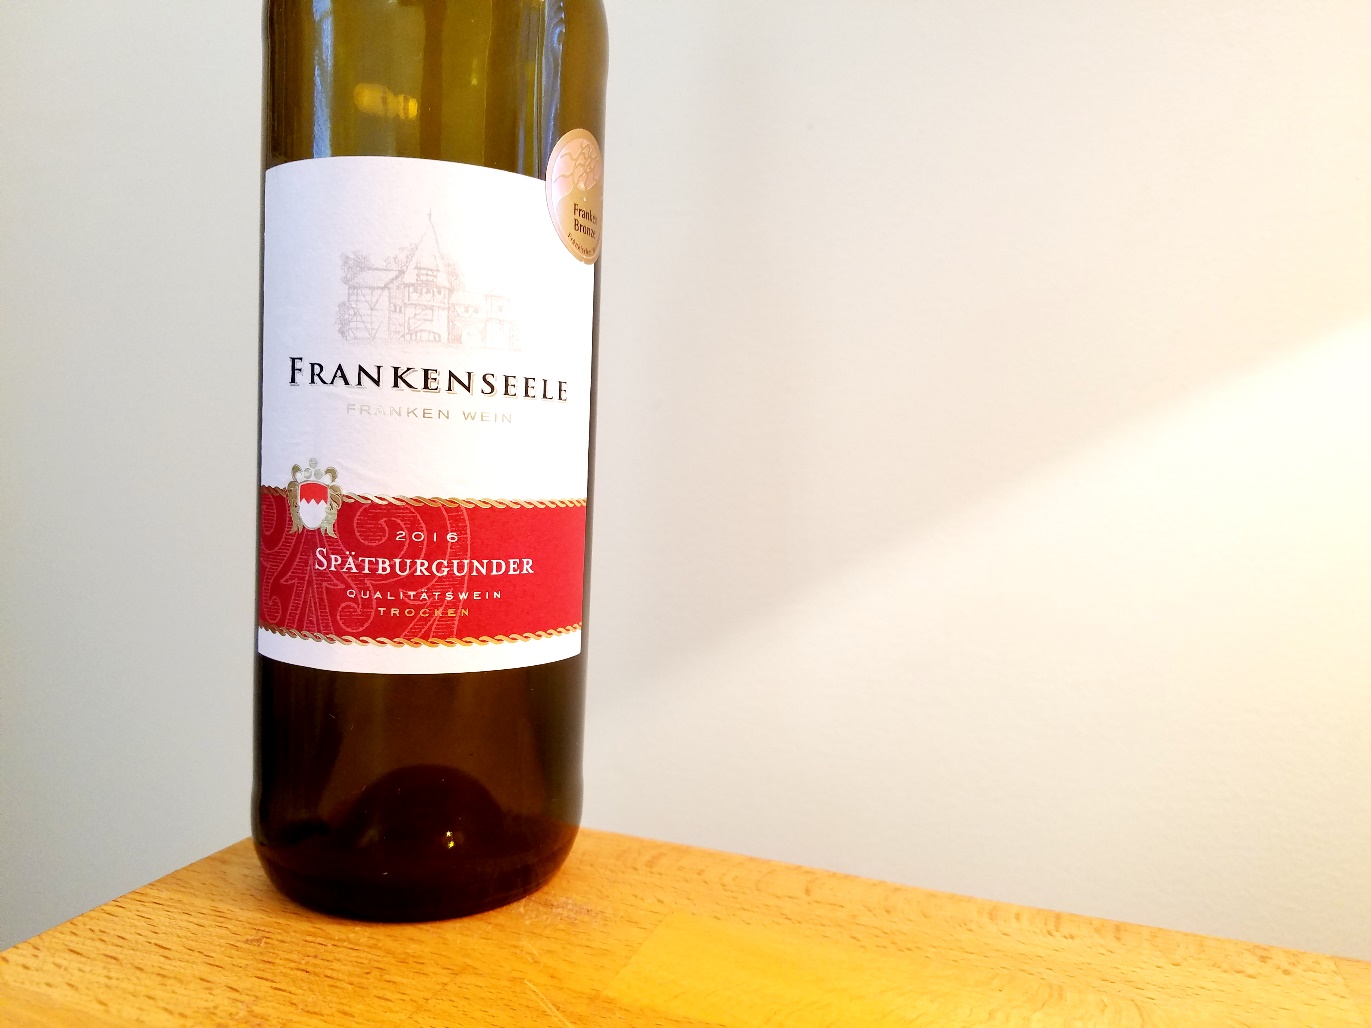 Frankenseele, Spätburgunder 2016, Franken, Germany, Wine Casual